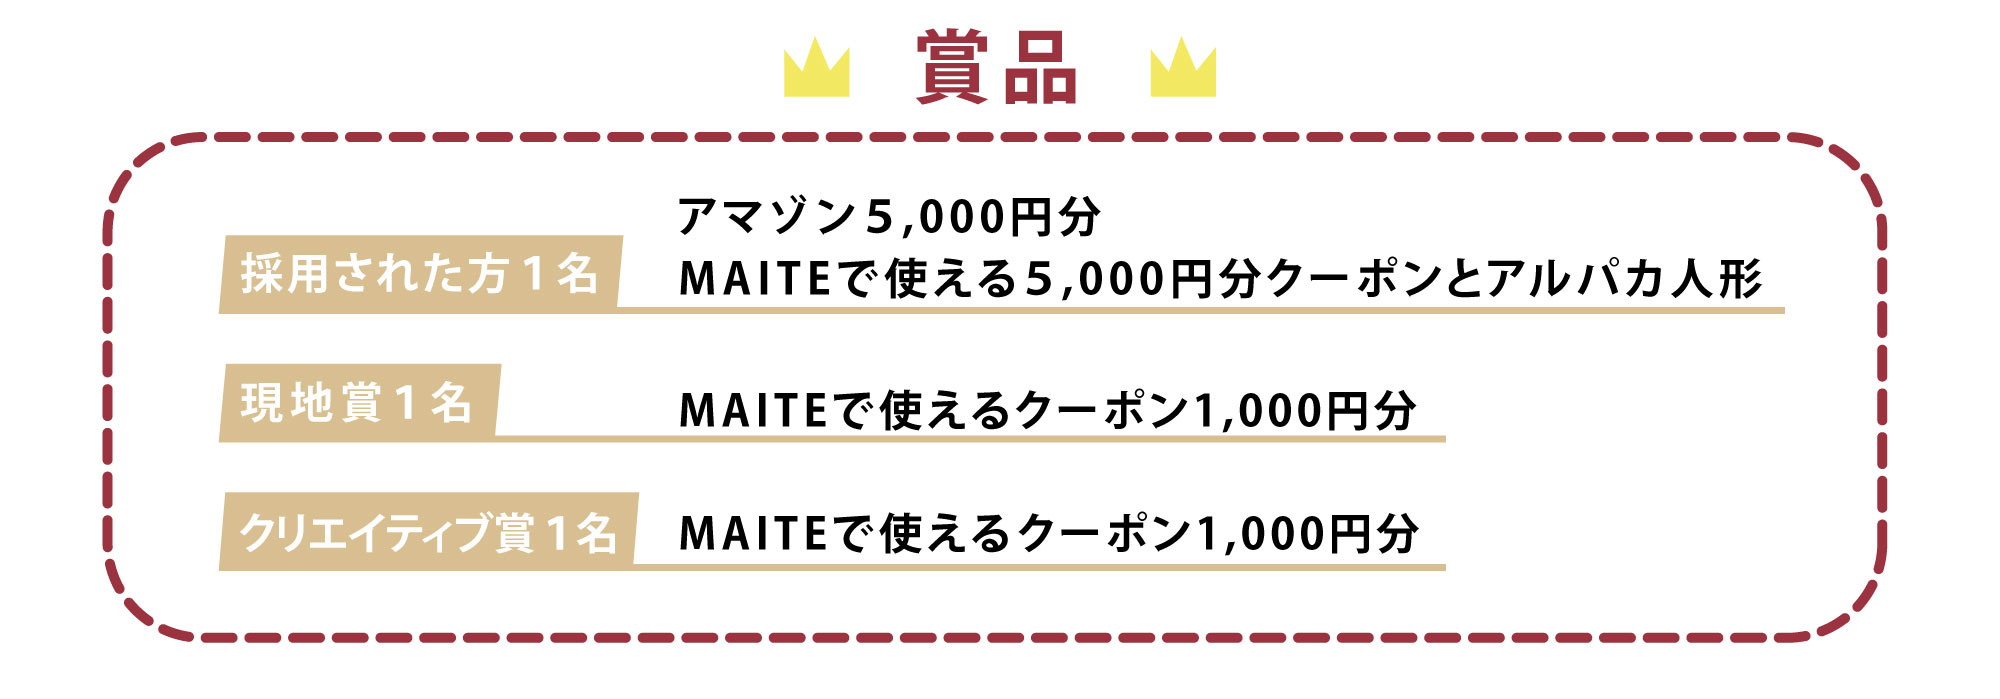 MAITE募集_2_2